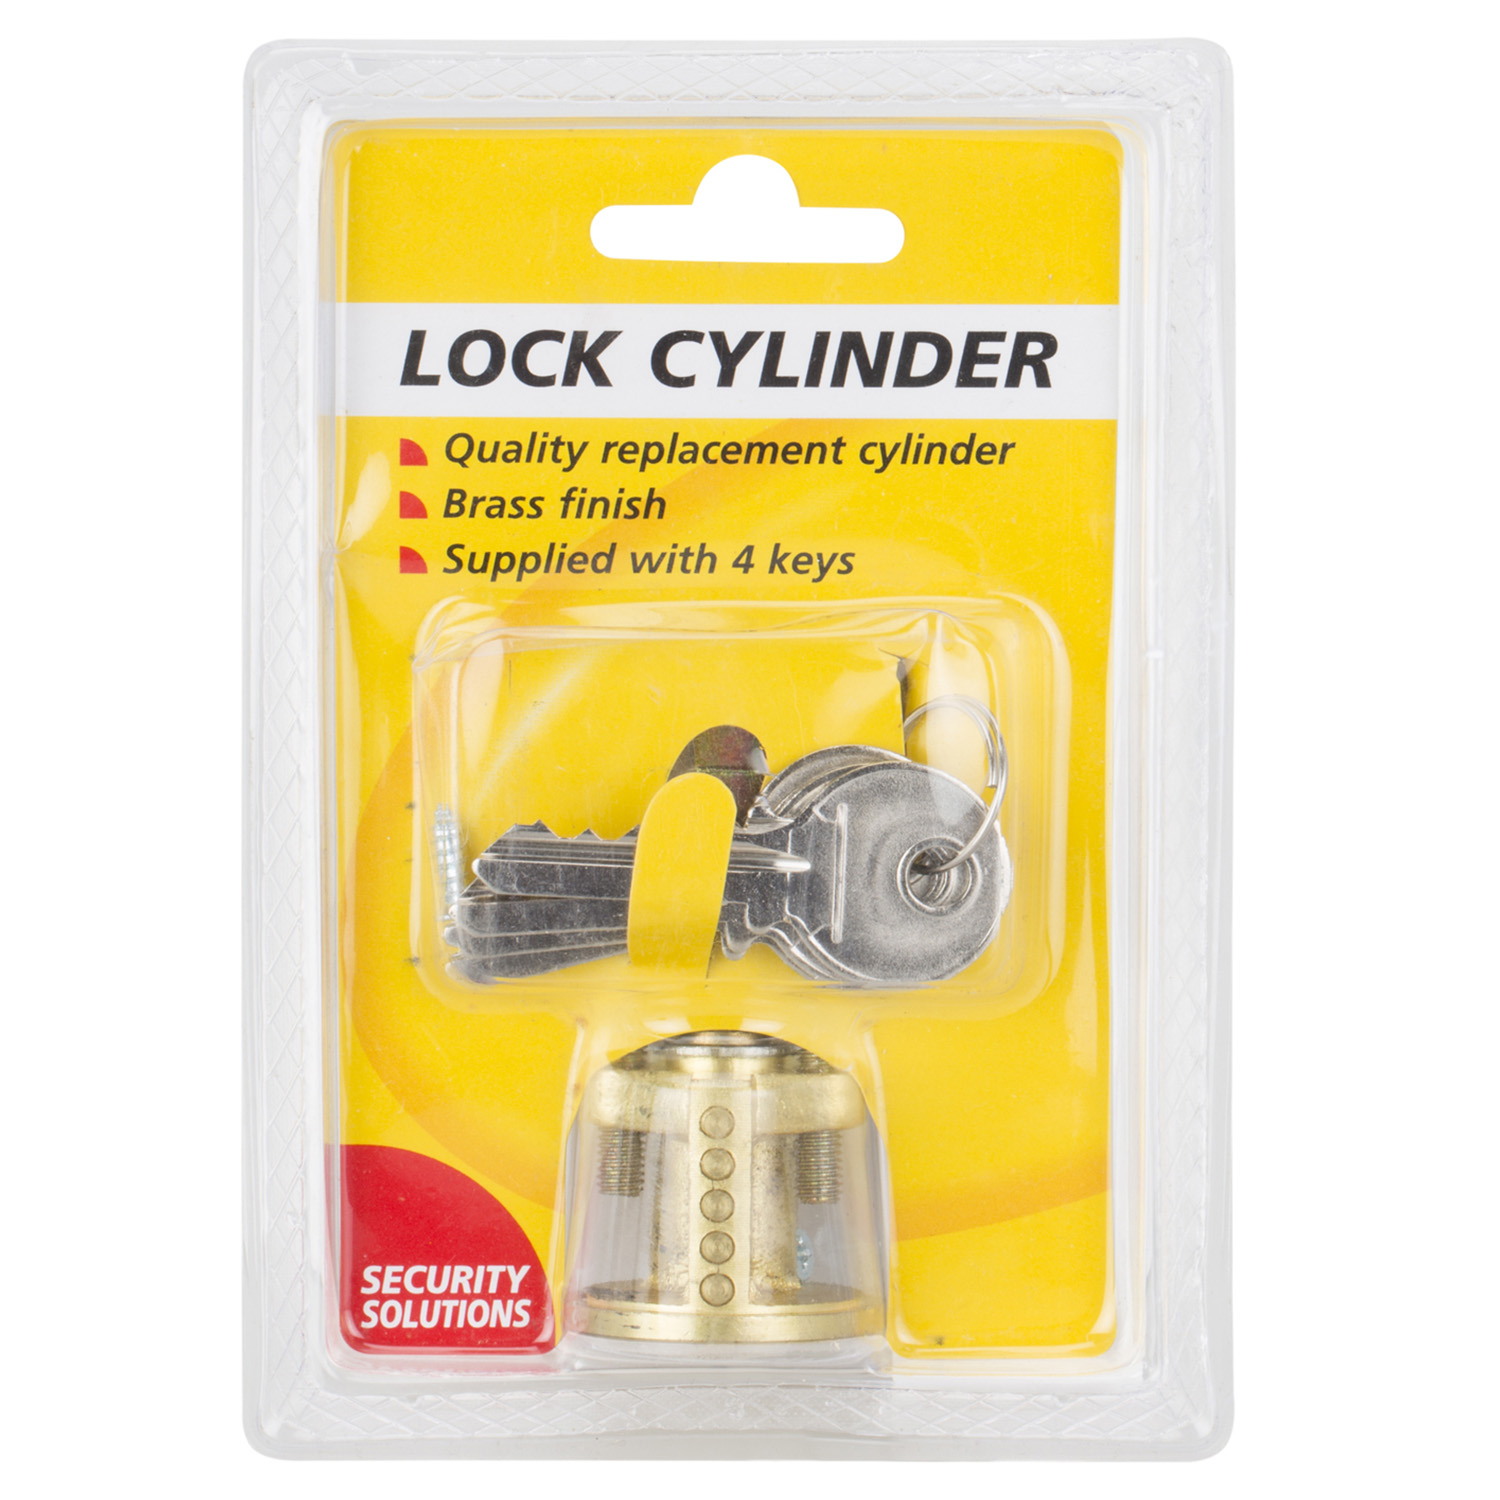 Hiatt Security Solutions Brass Finish Lock Cylinder with Keys Image